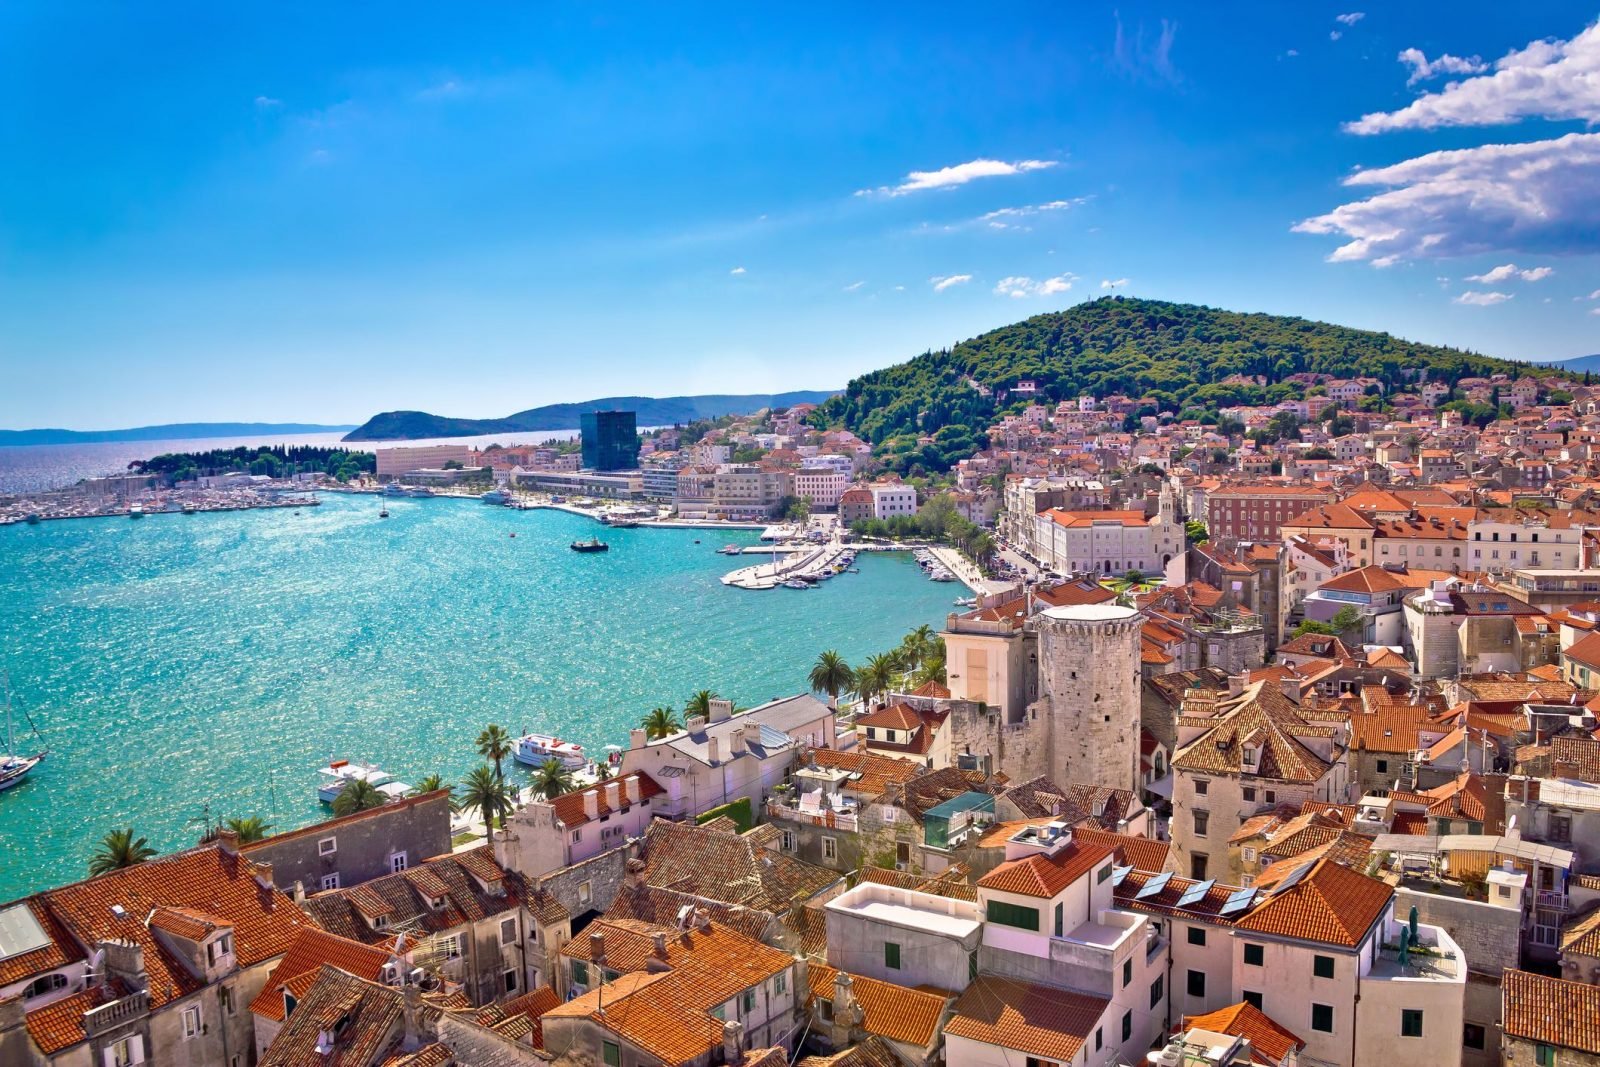 The historic city of Split, Croatia, hugging the Mediterranean Sea.